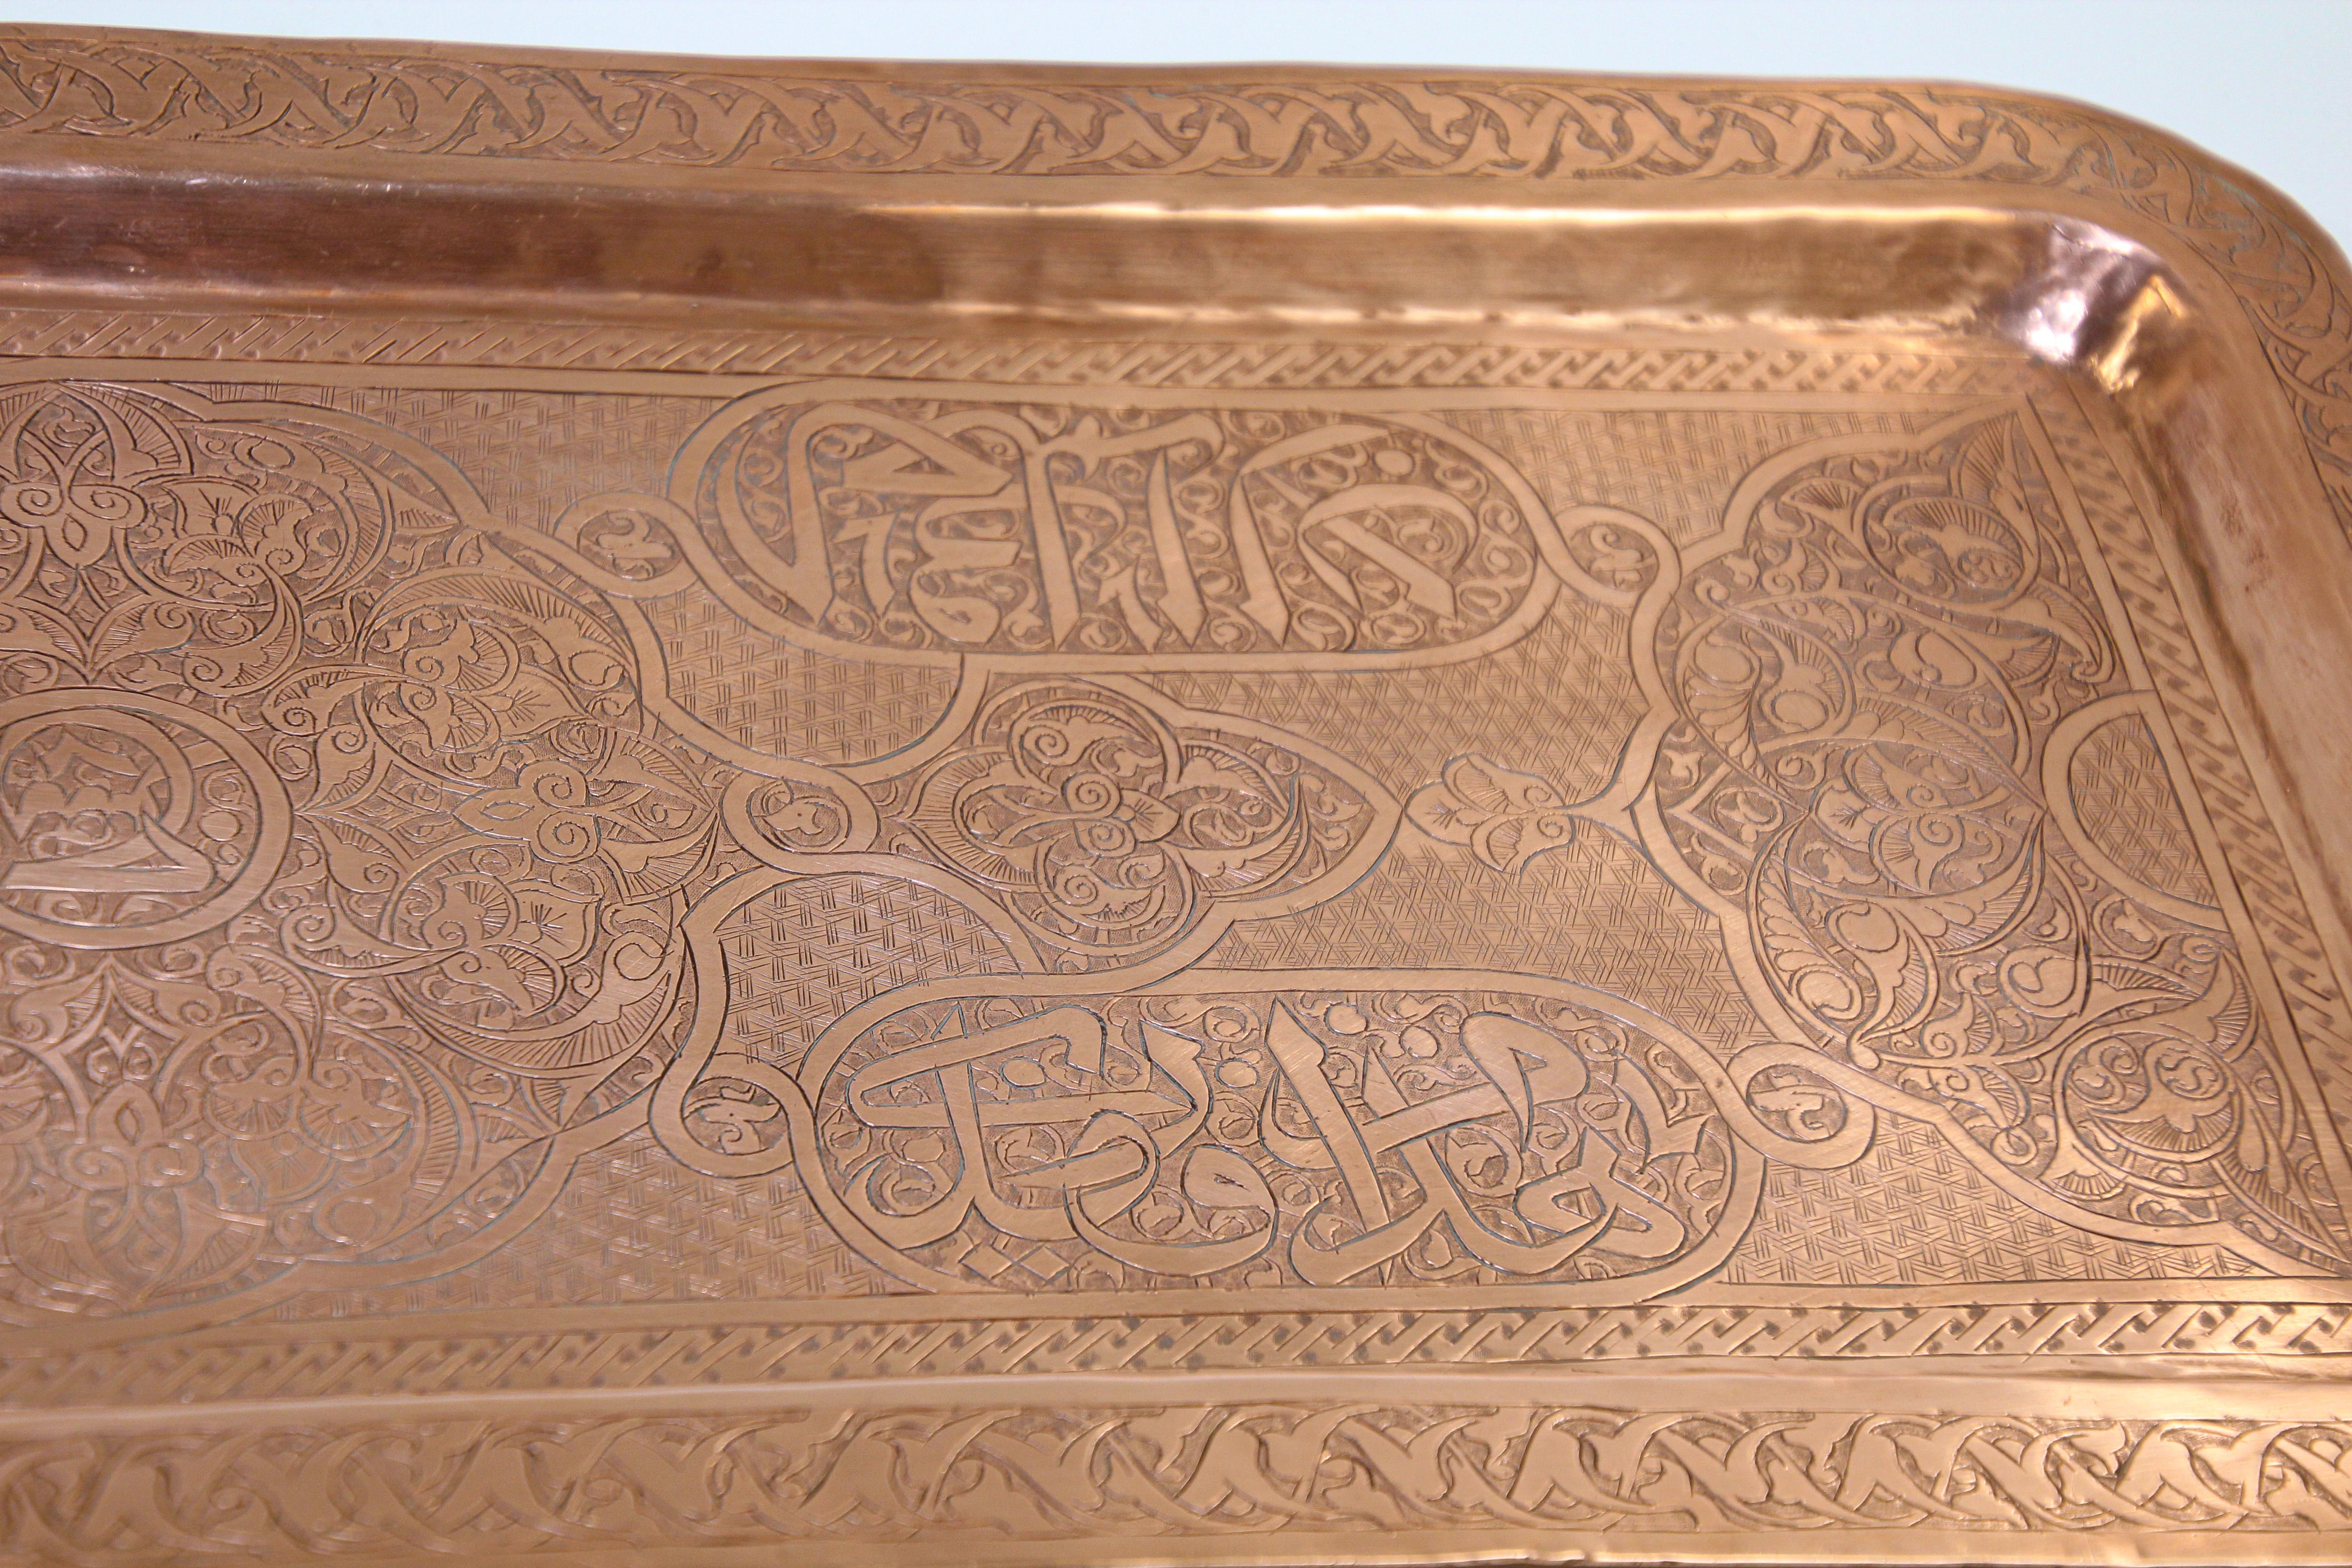 Cuivre Plateau de service ancien en cuivre persan indo-indien en vente